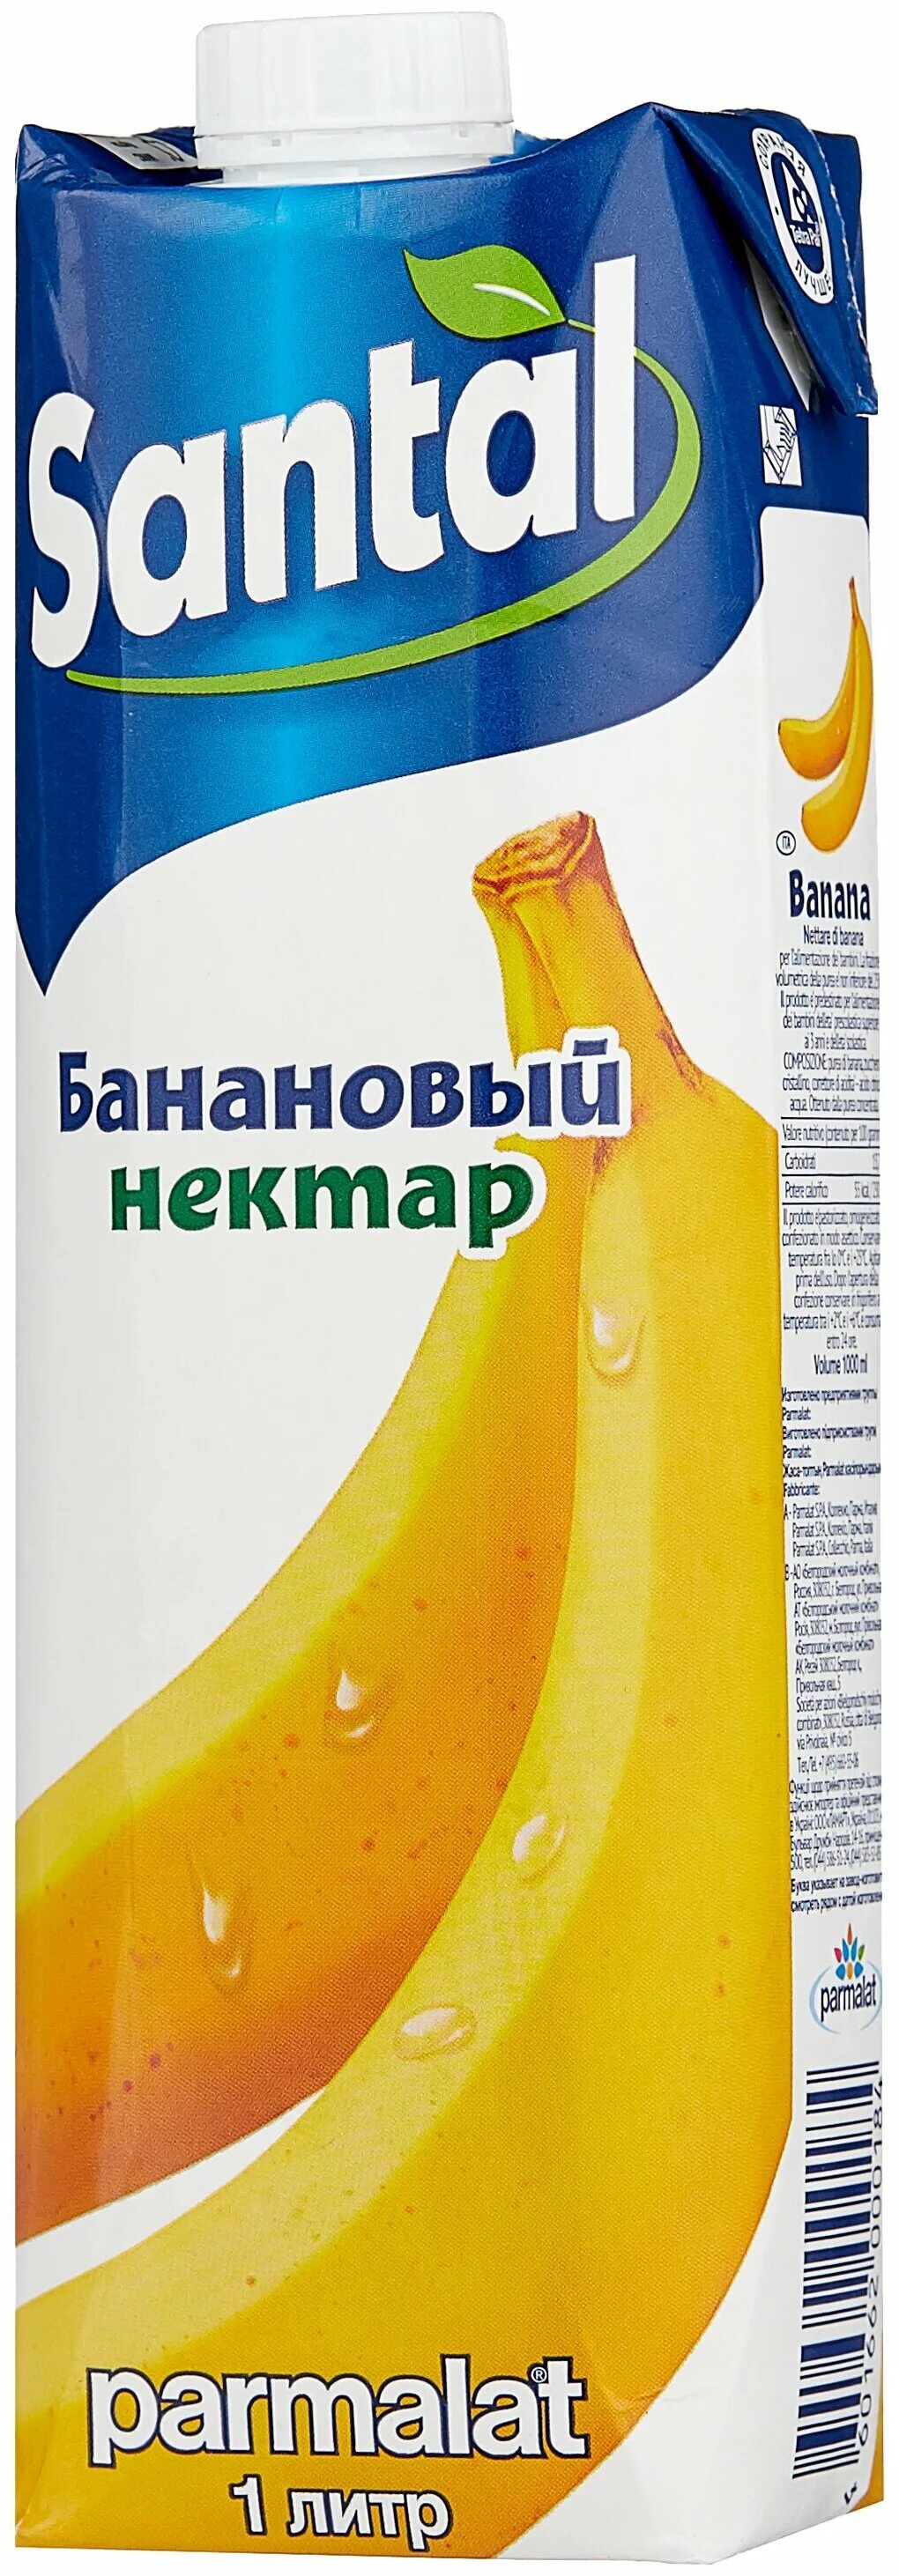 Santal банановый нектар. Банановый сок Santal. Нектар банановый ДП С мякотью ТМ "Santal" 1л. Сантал сок банановый Сантал. Банановый нектар